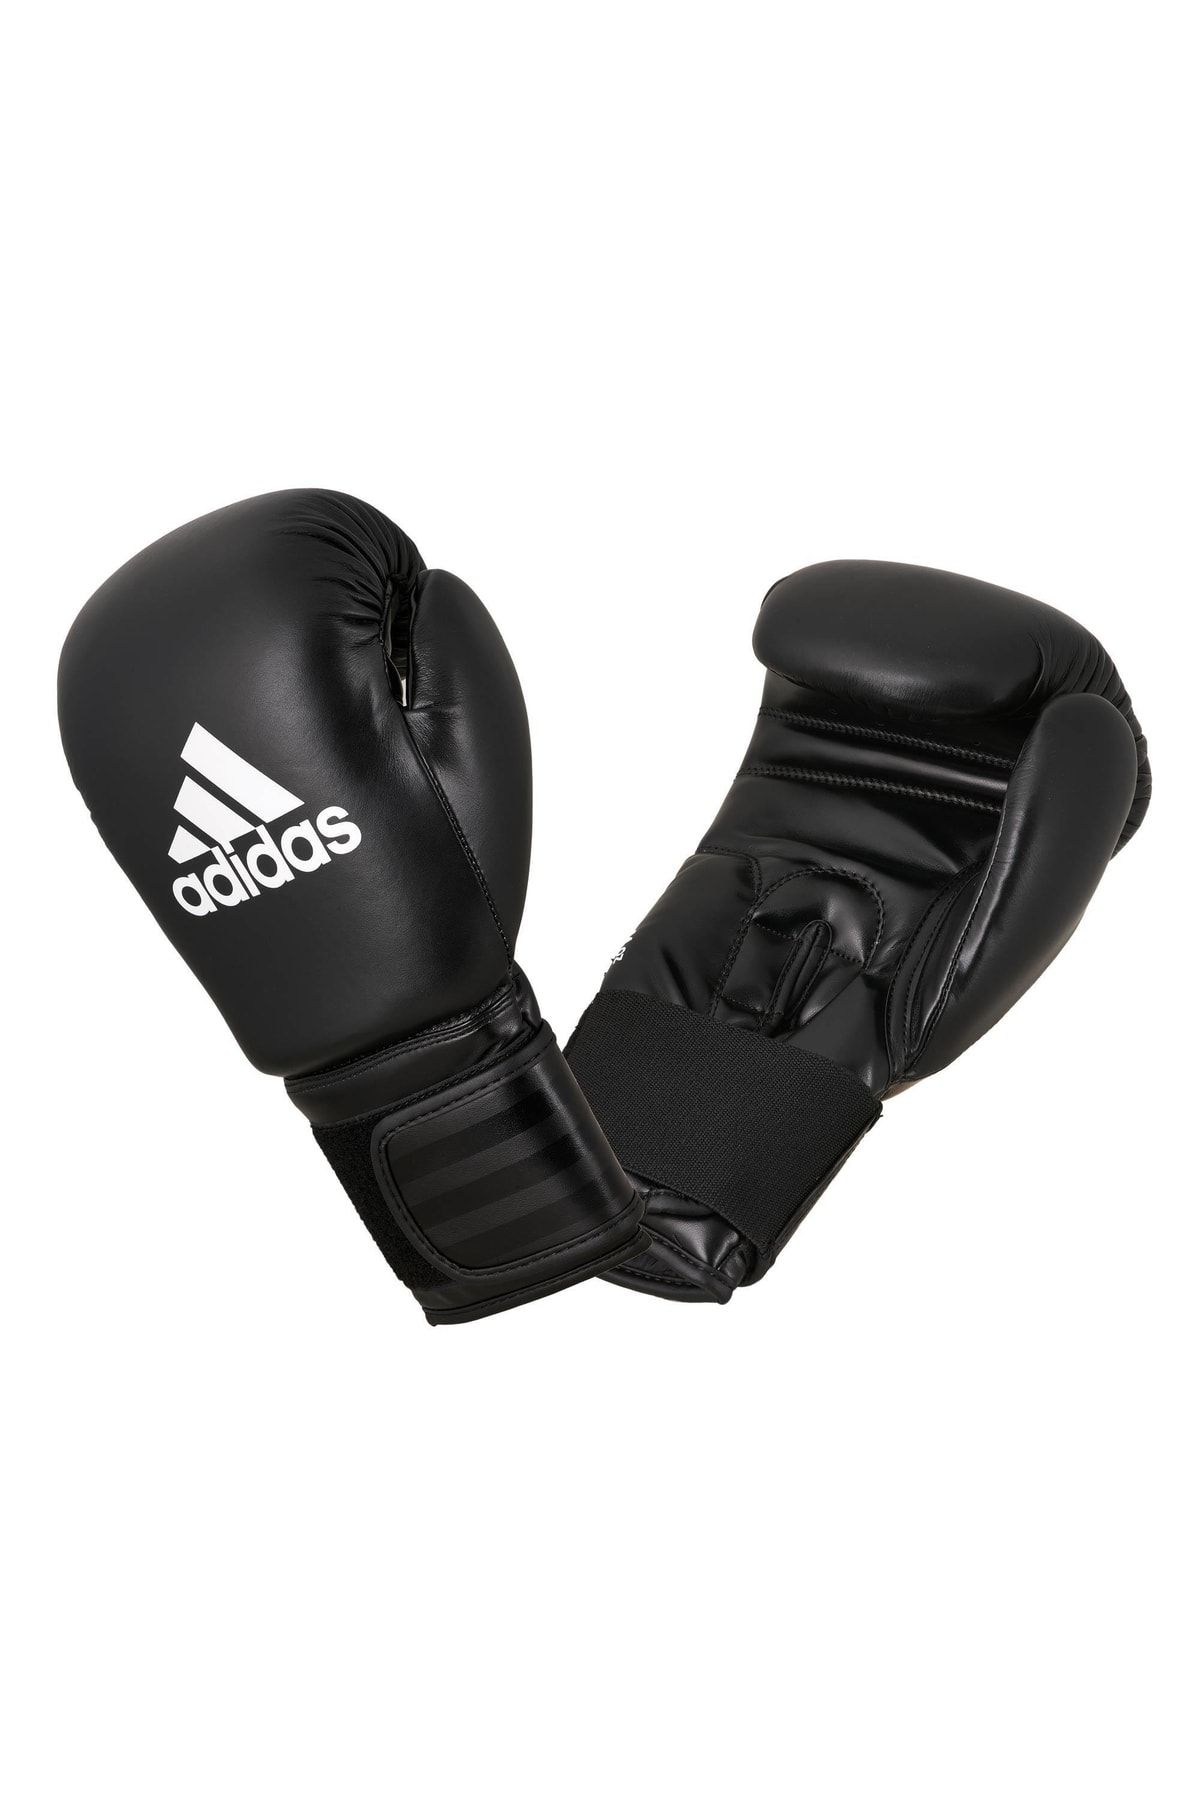 adidas Adıbc01 Performer Boks Eldiveni , Boxing Gloves